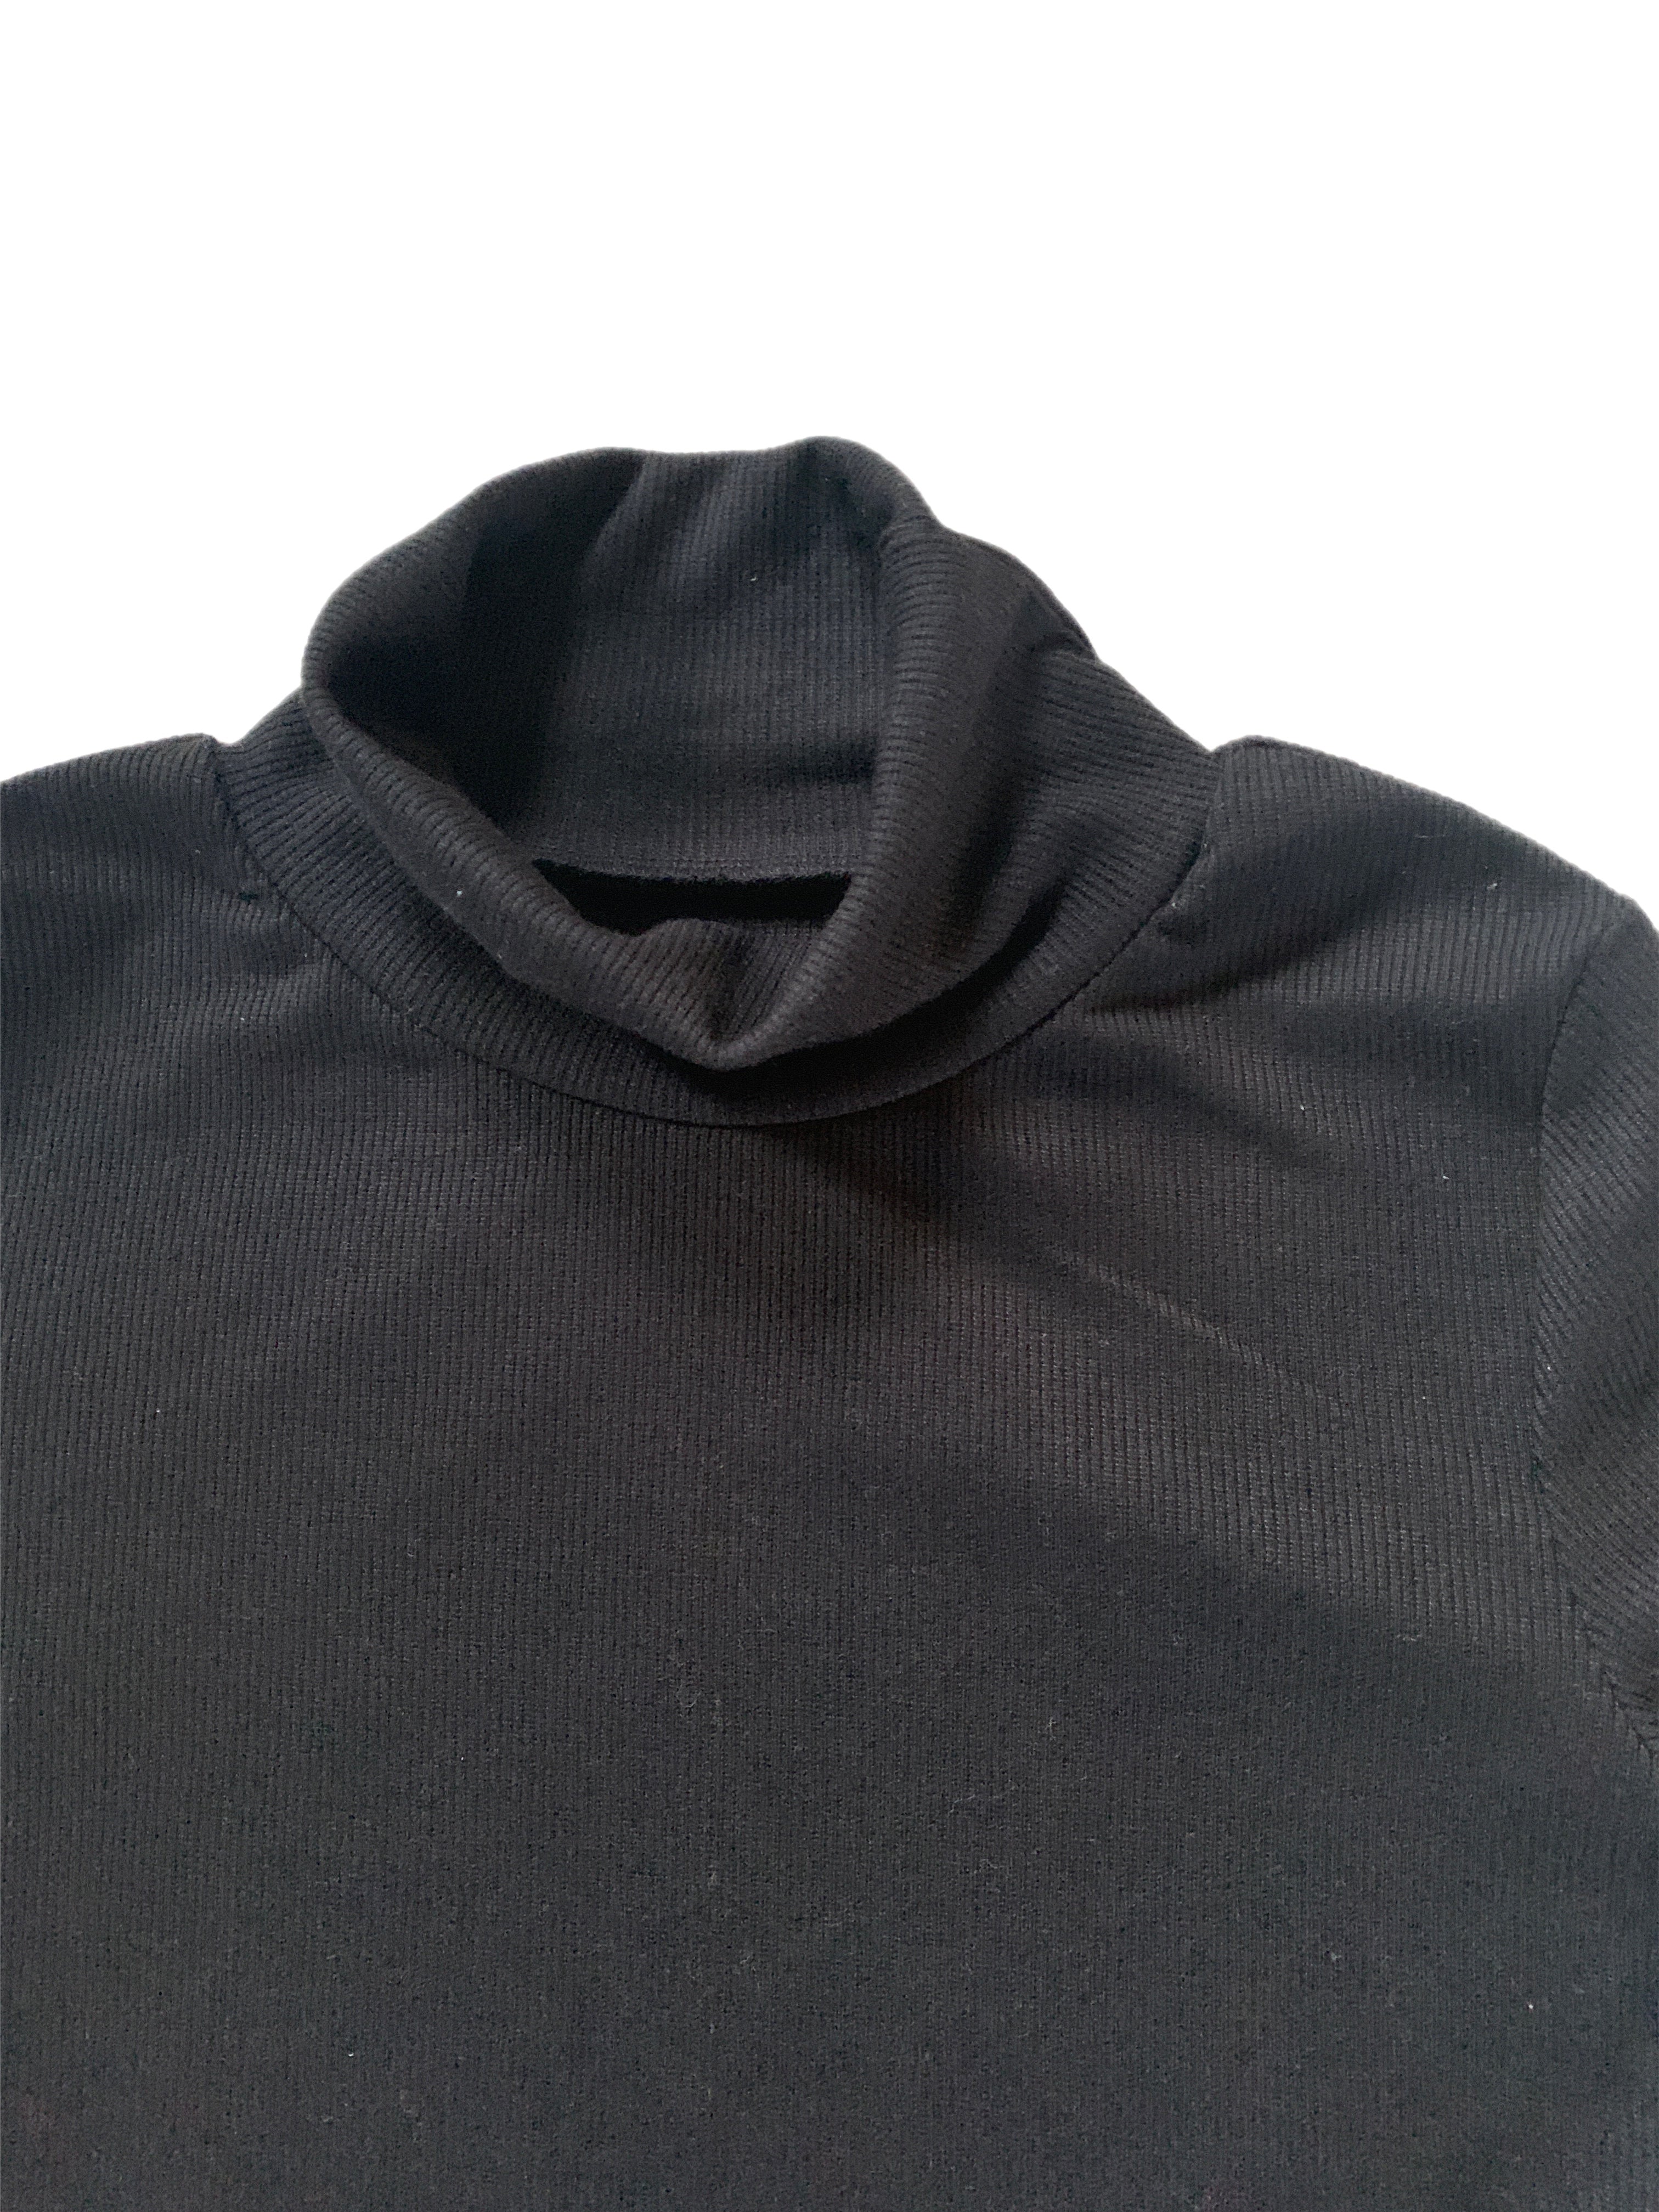 Brown Plaid Skirt & Black Ribbed Shirt Set